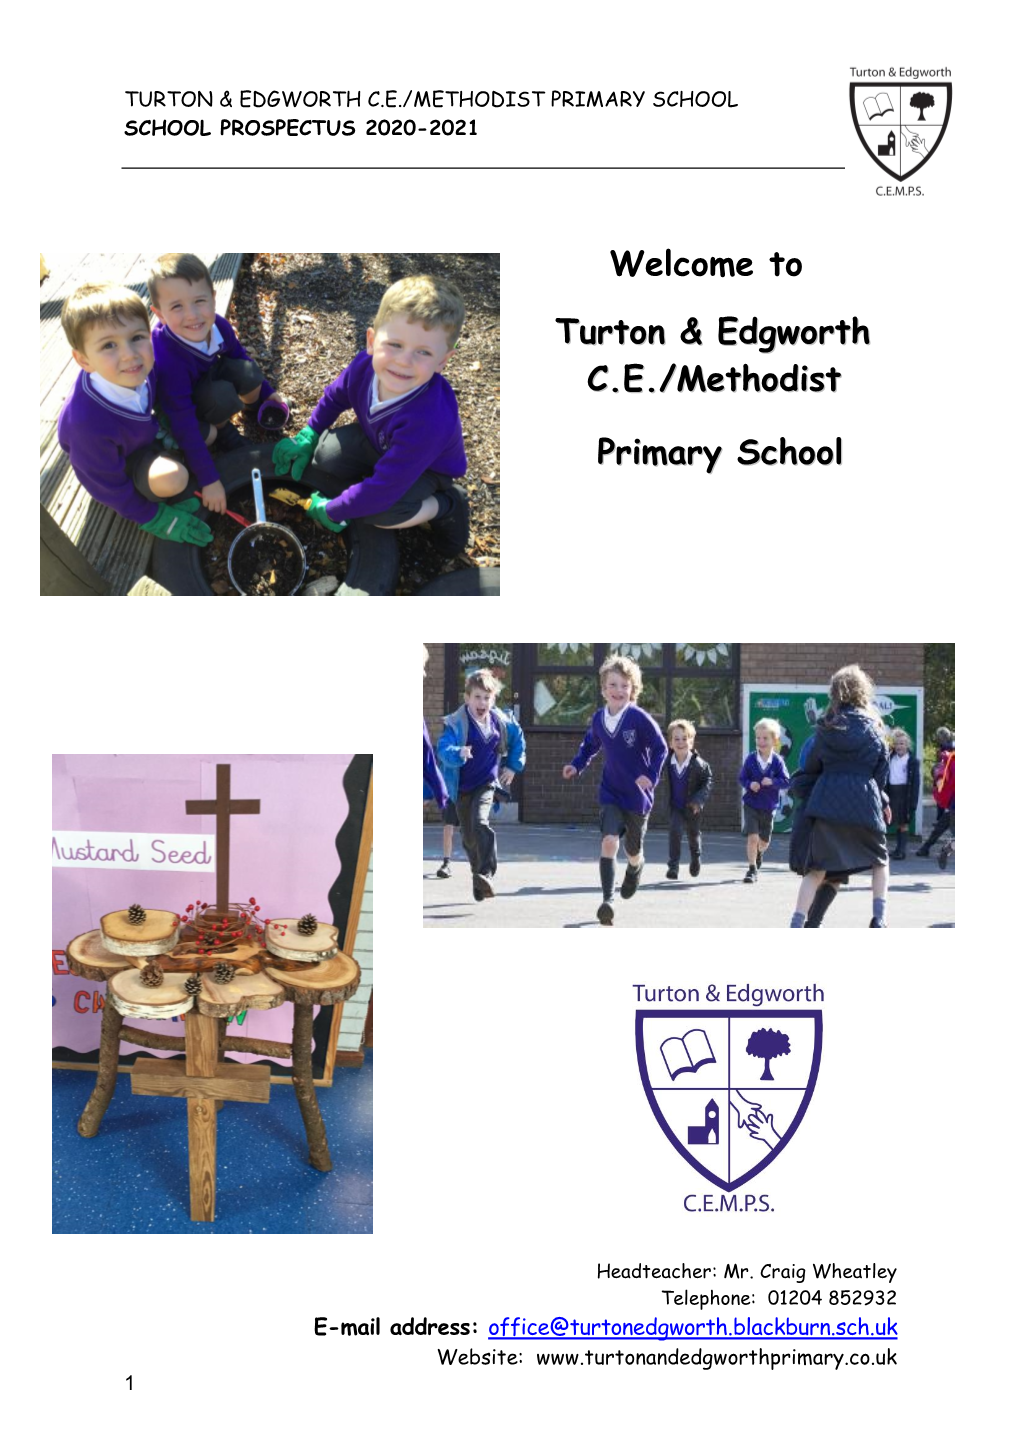 Edgworth C.E./Methodist Primary School School Prospectus 2020-2021